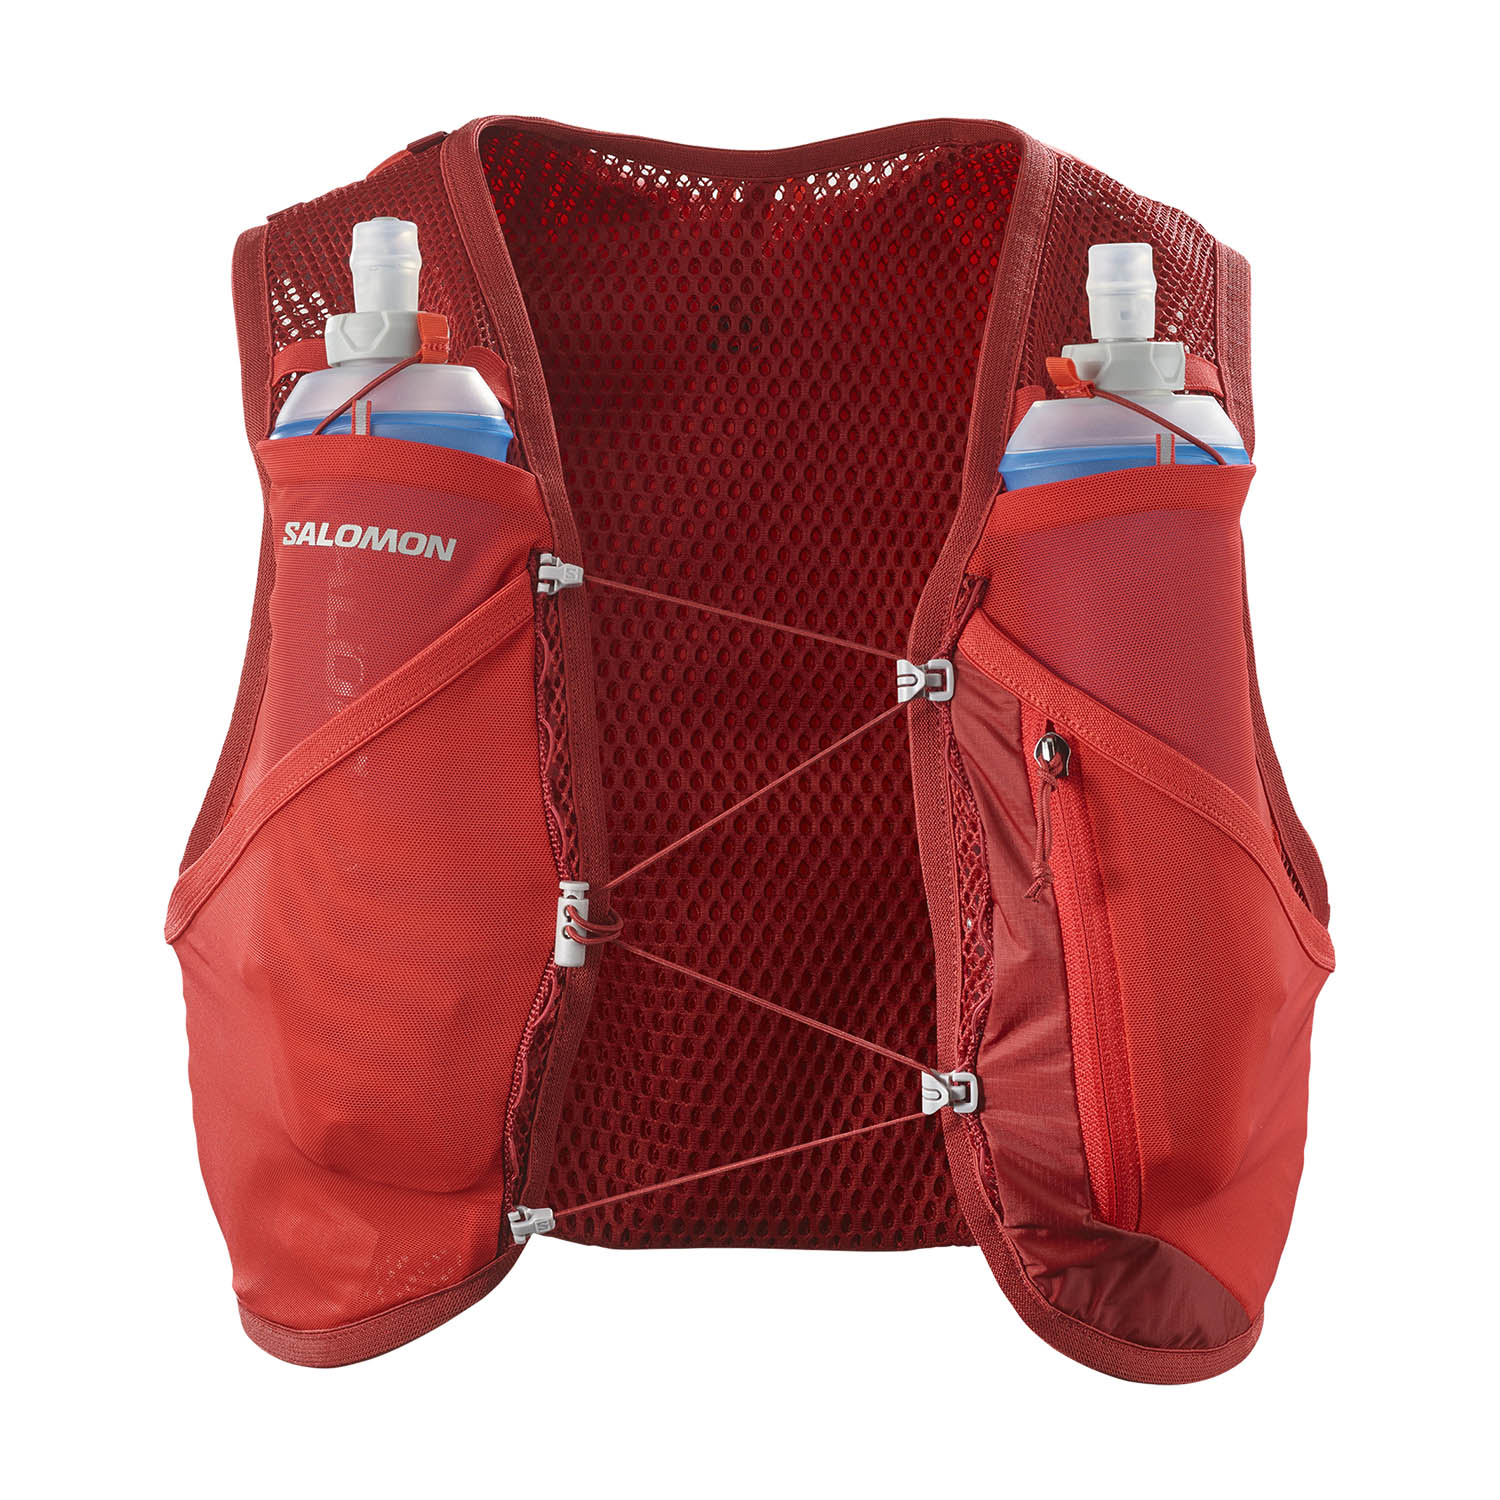 Salomon Active Skin 4 Set Backpack - Red Dahlia/High Risk Red